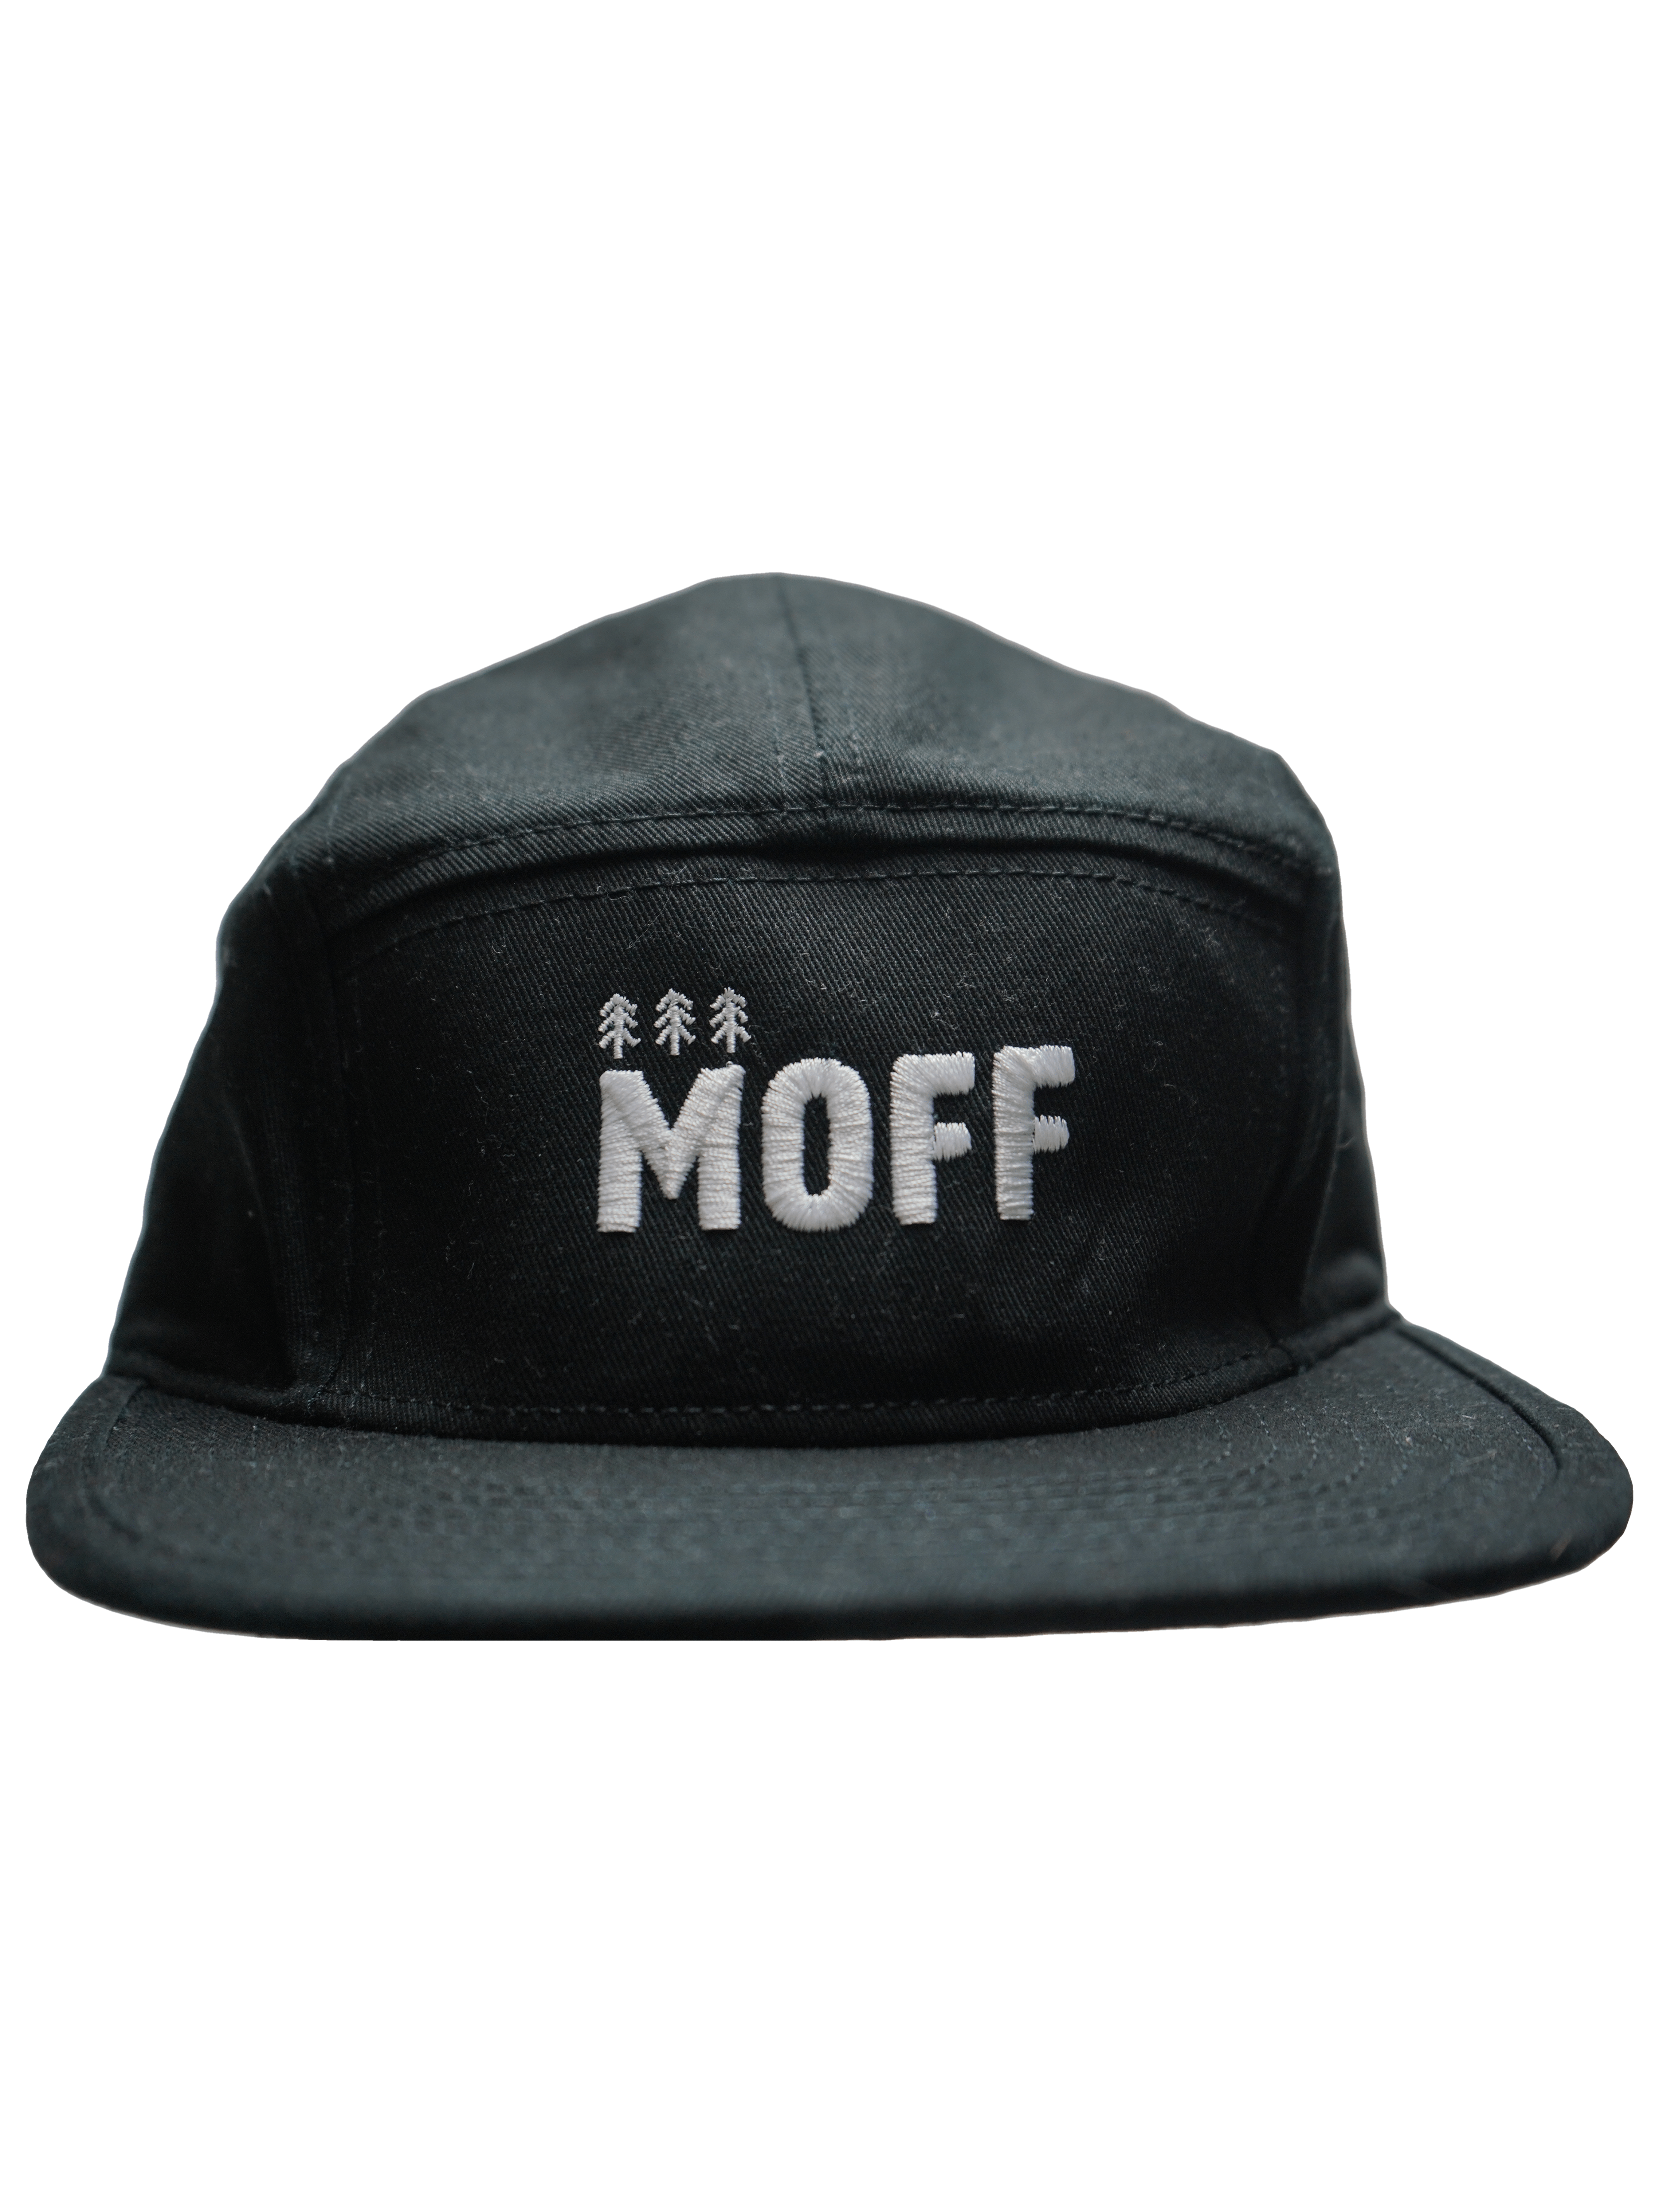 MOFF Wide-Brimmed Hat (Black) - MOFF - Maine Outdoor Film Festival